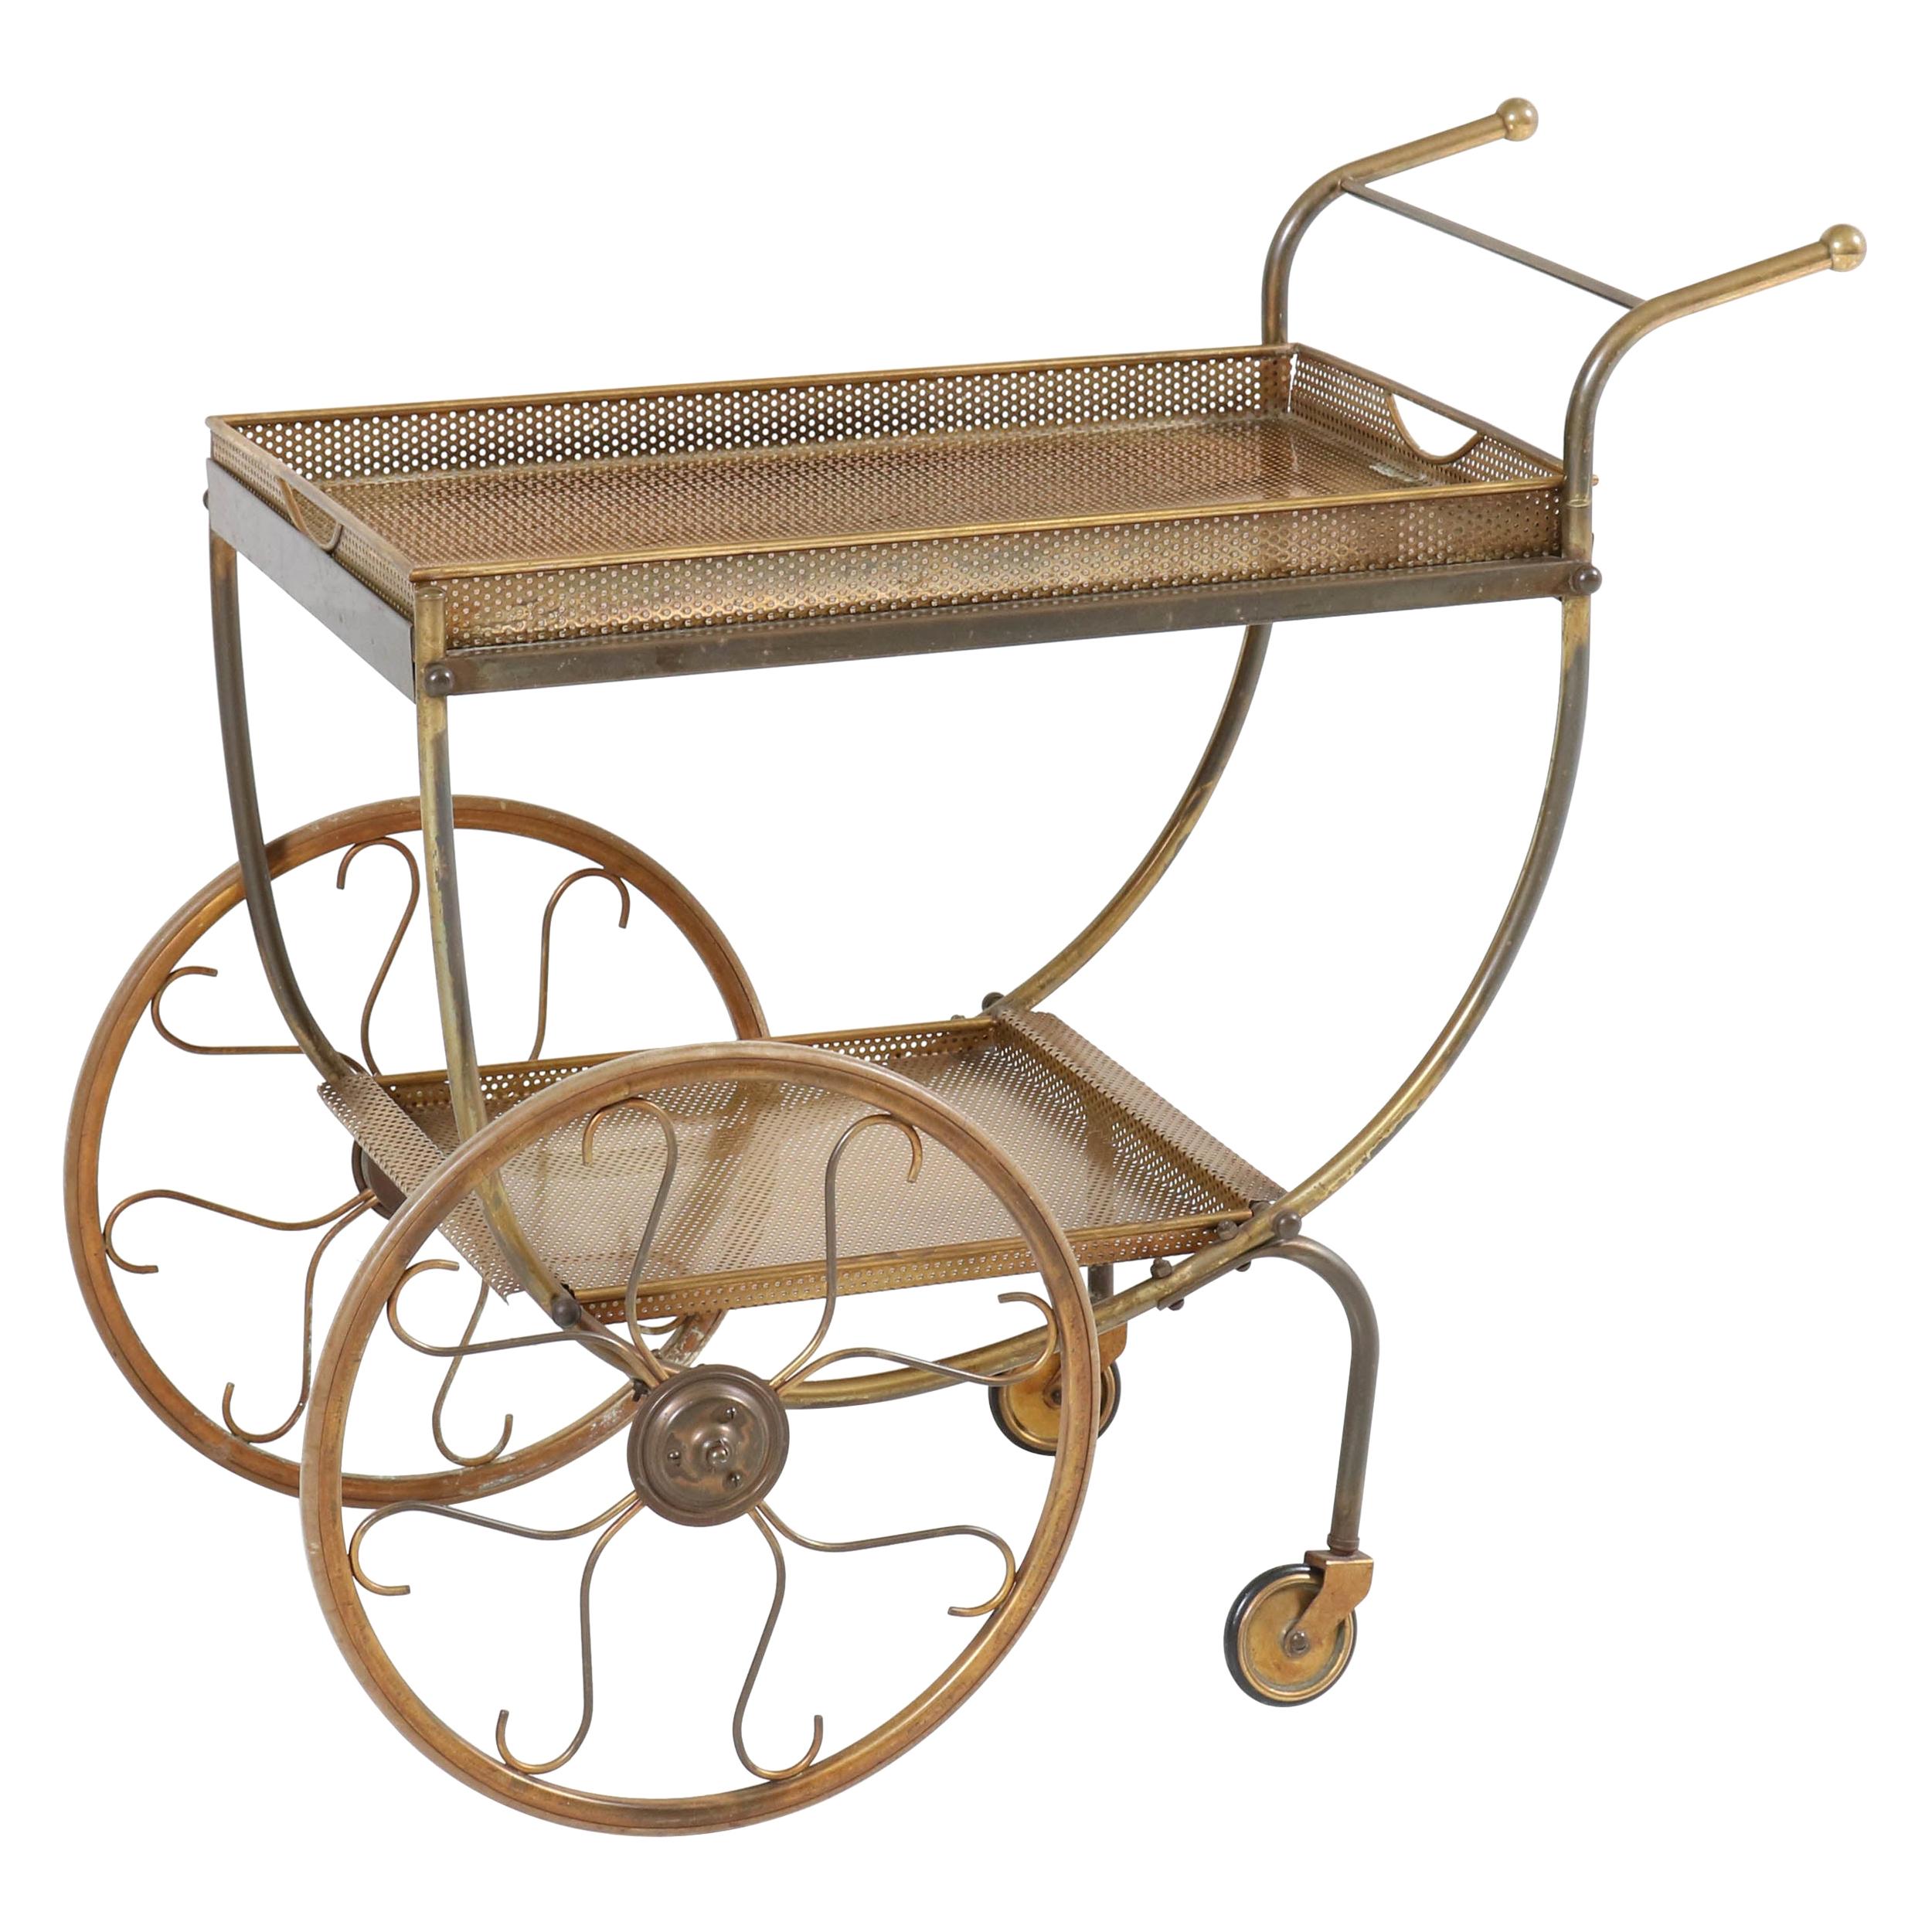 Swedish Mid-Century Modern Brass Bar Cart or Tea Trolley by Svenskt Tenn, 1950s